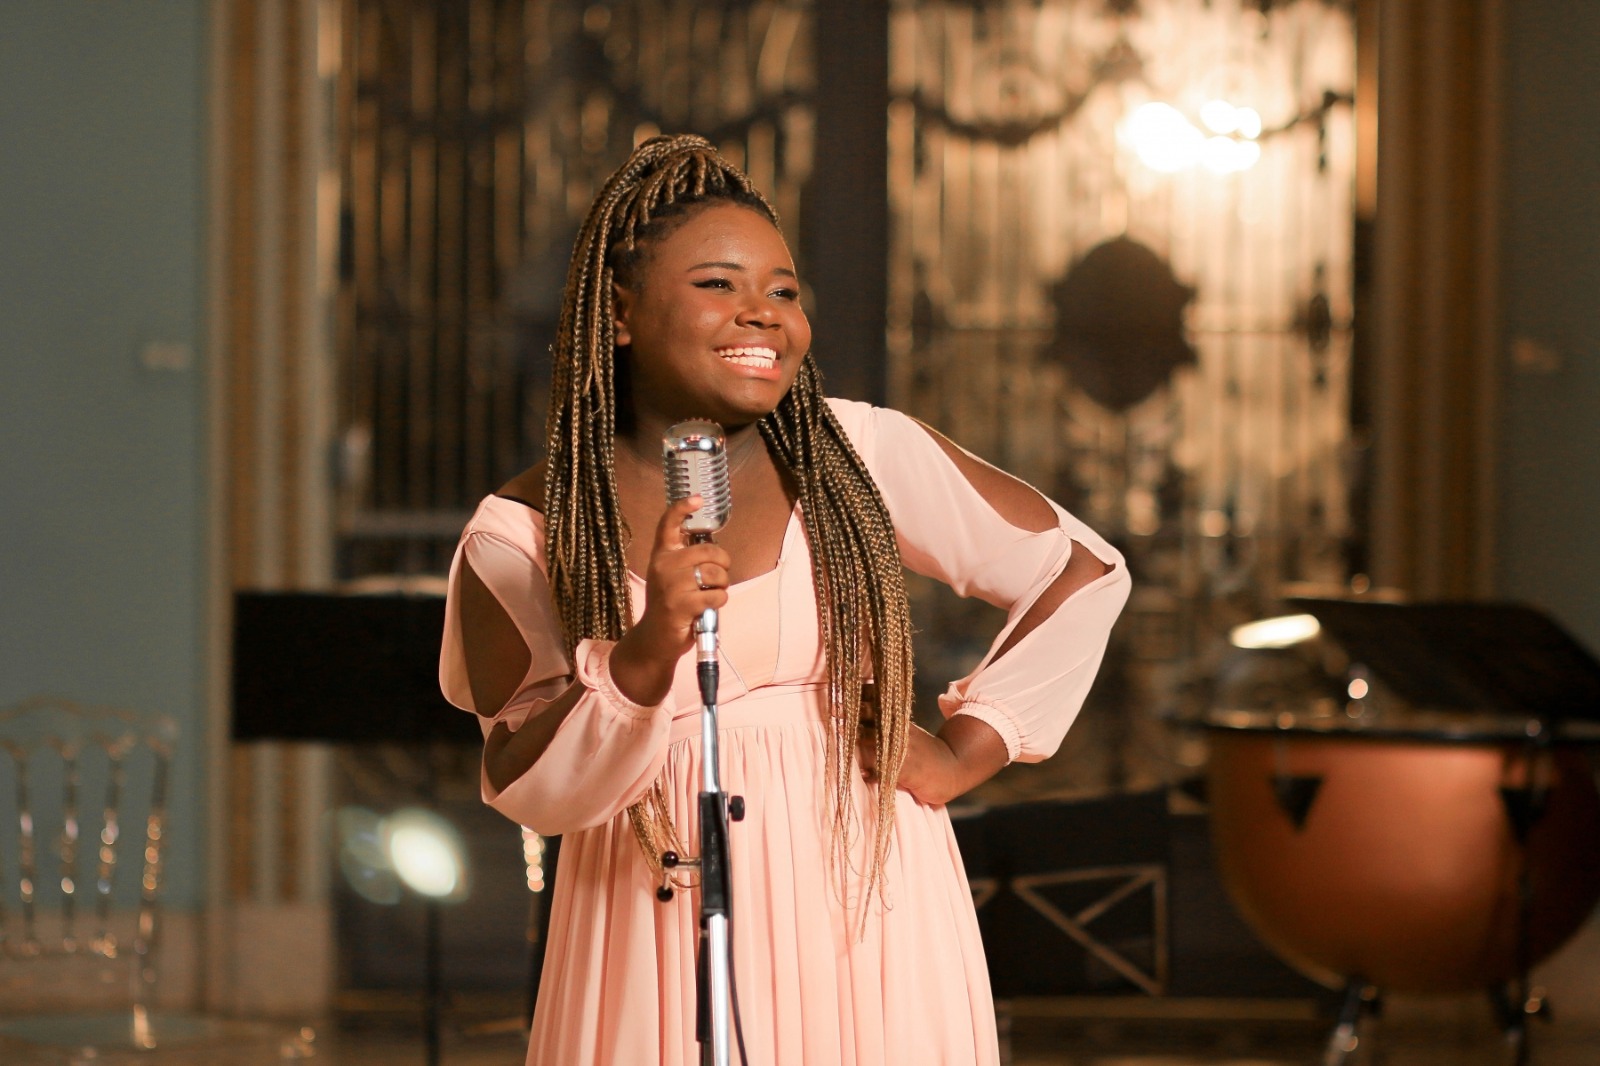 Fenômeno da música gospel, Kellen Byanca participa de congresso de jovens em Volta Redonda